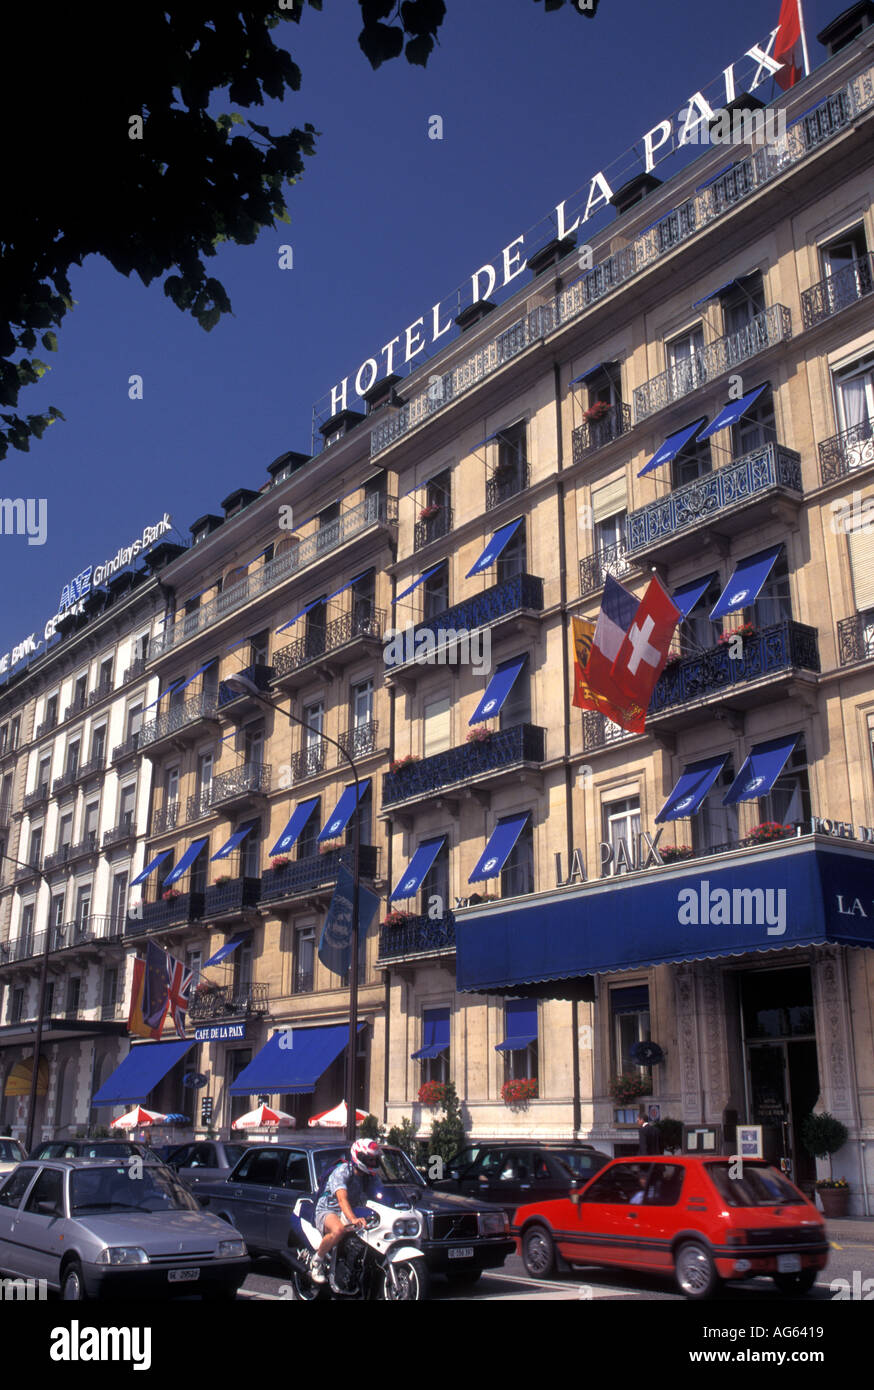 Hotel de la paix hi-res stock photography and images - Alamy